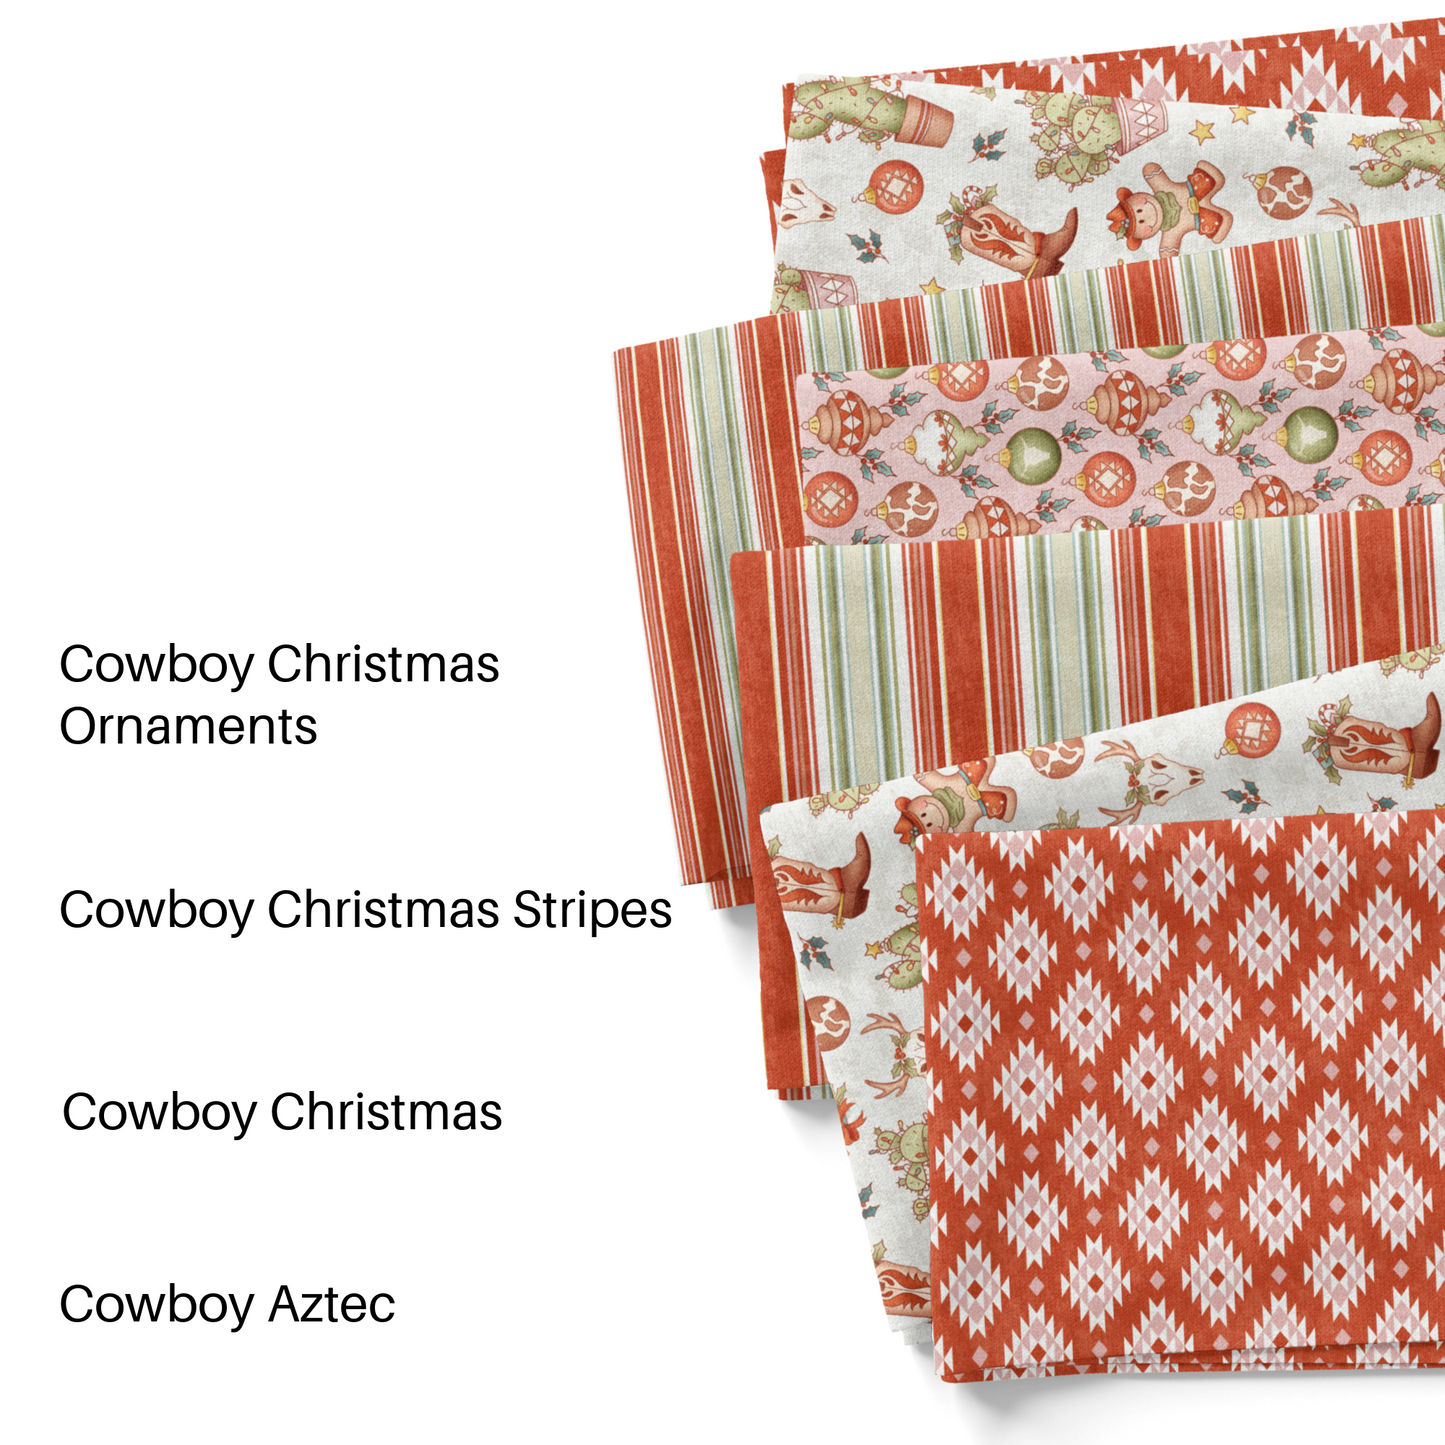 Cowboy Christmas Ornaments Fabric By The Yard